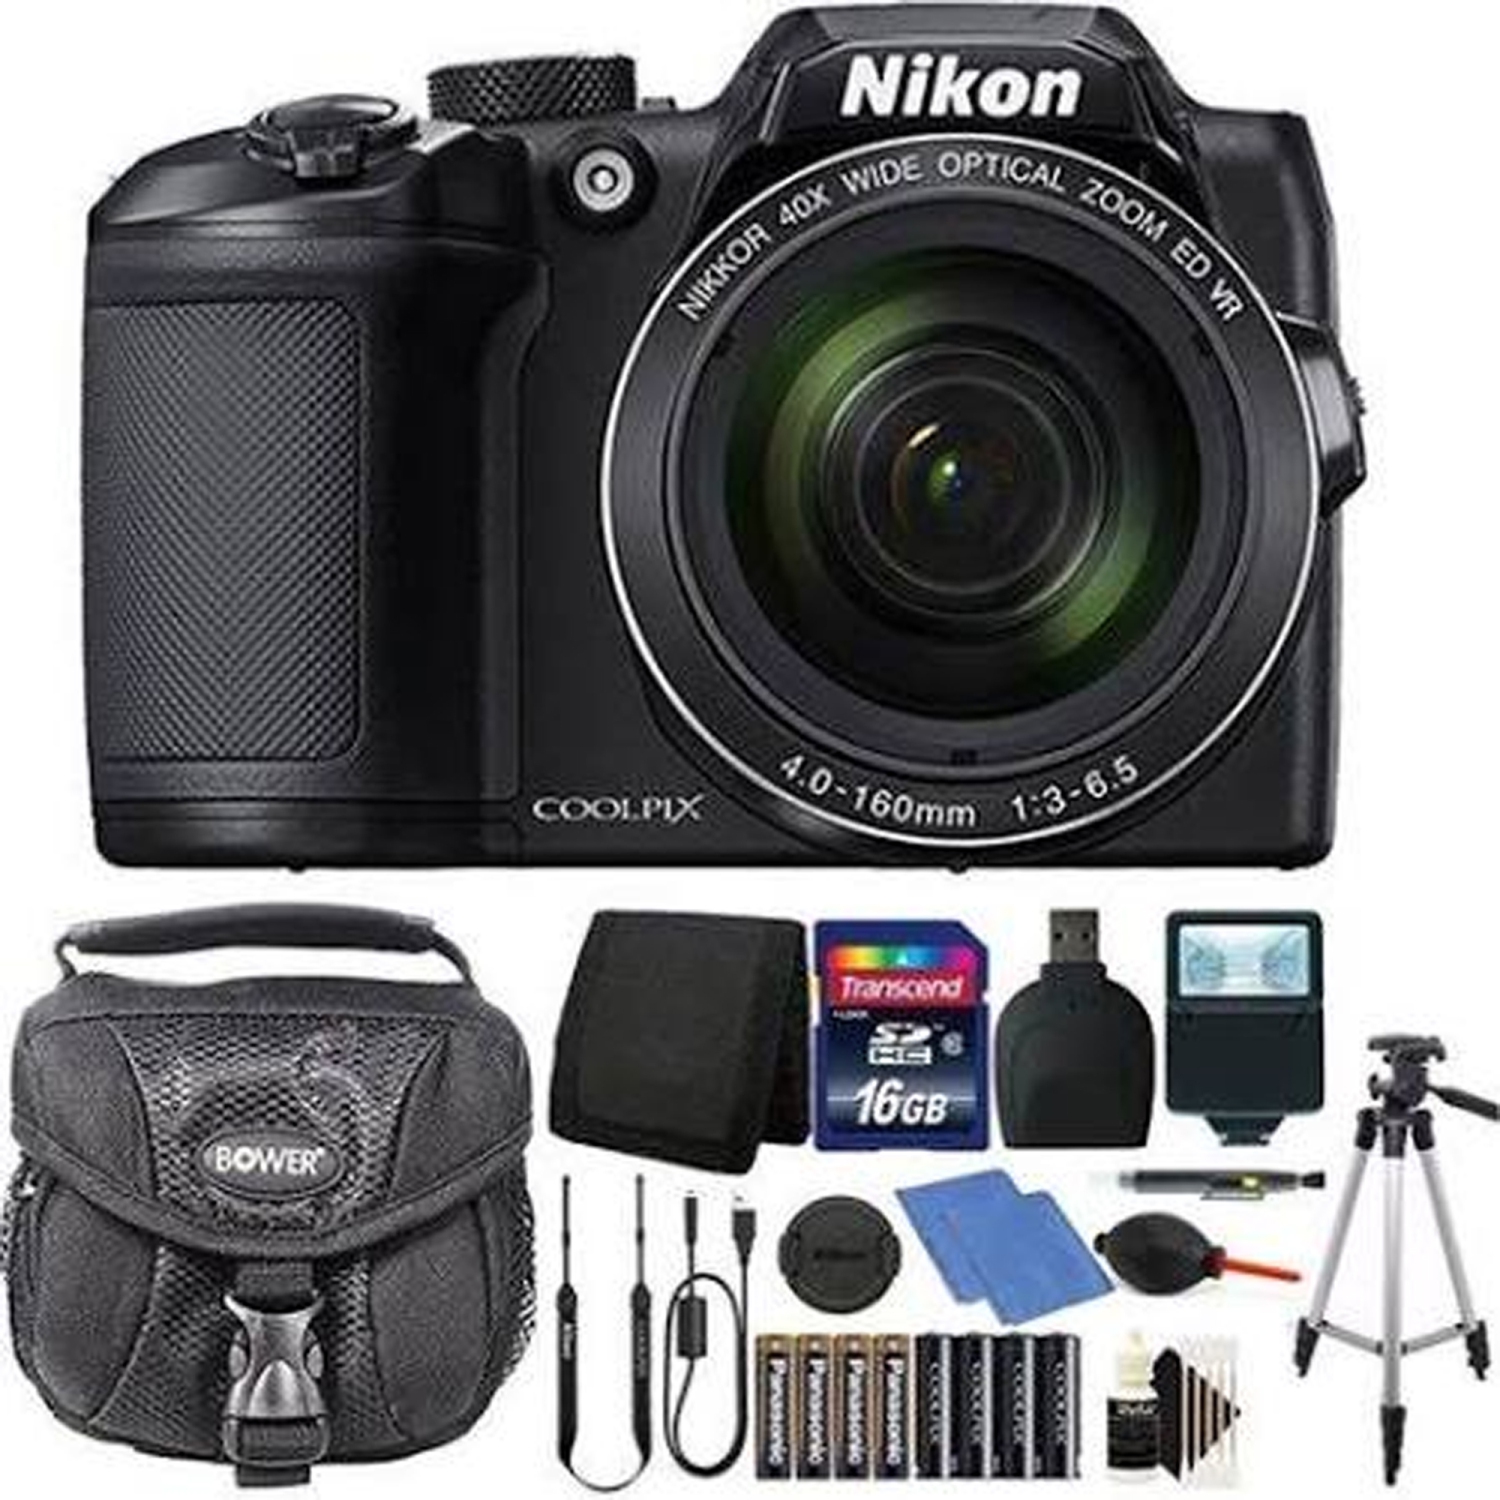 Nikon Coolpix B500 16MP Digital Camera with Extra Batteries + Accessories -Black - US Version w/ Seller Warranty